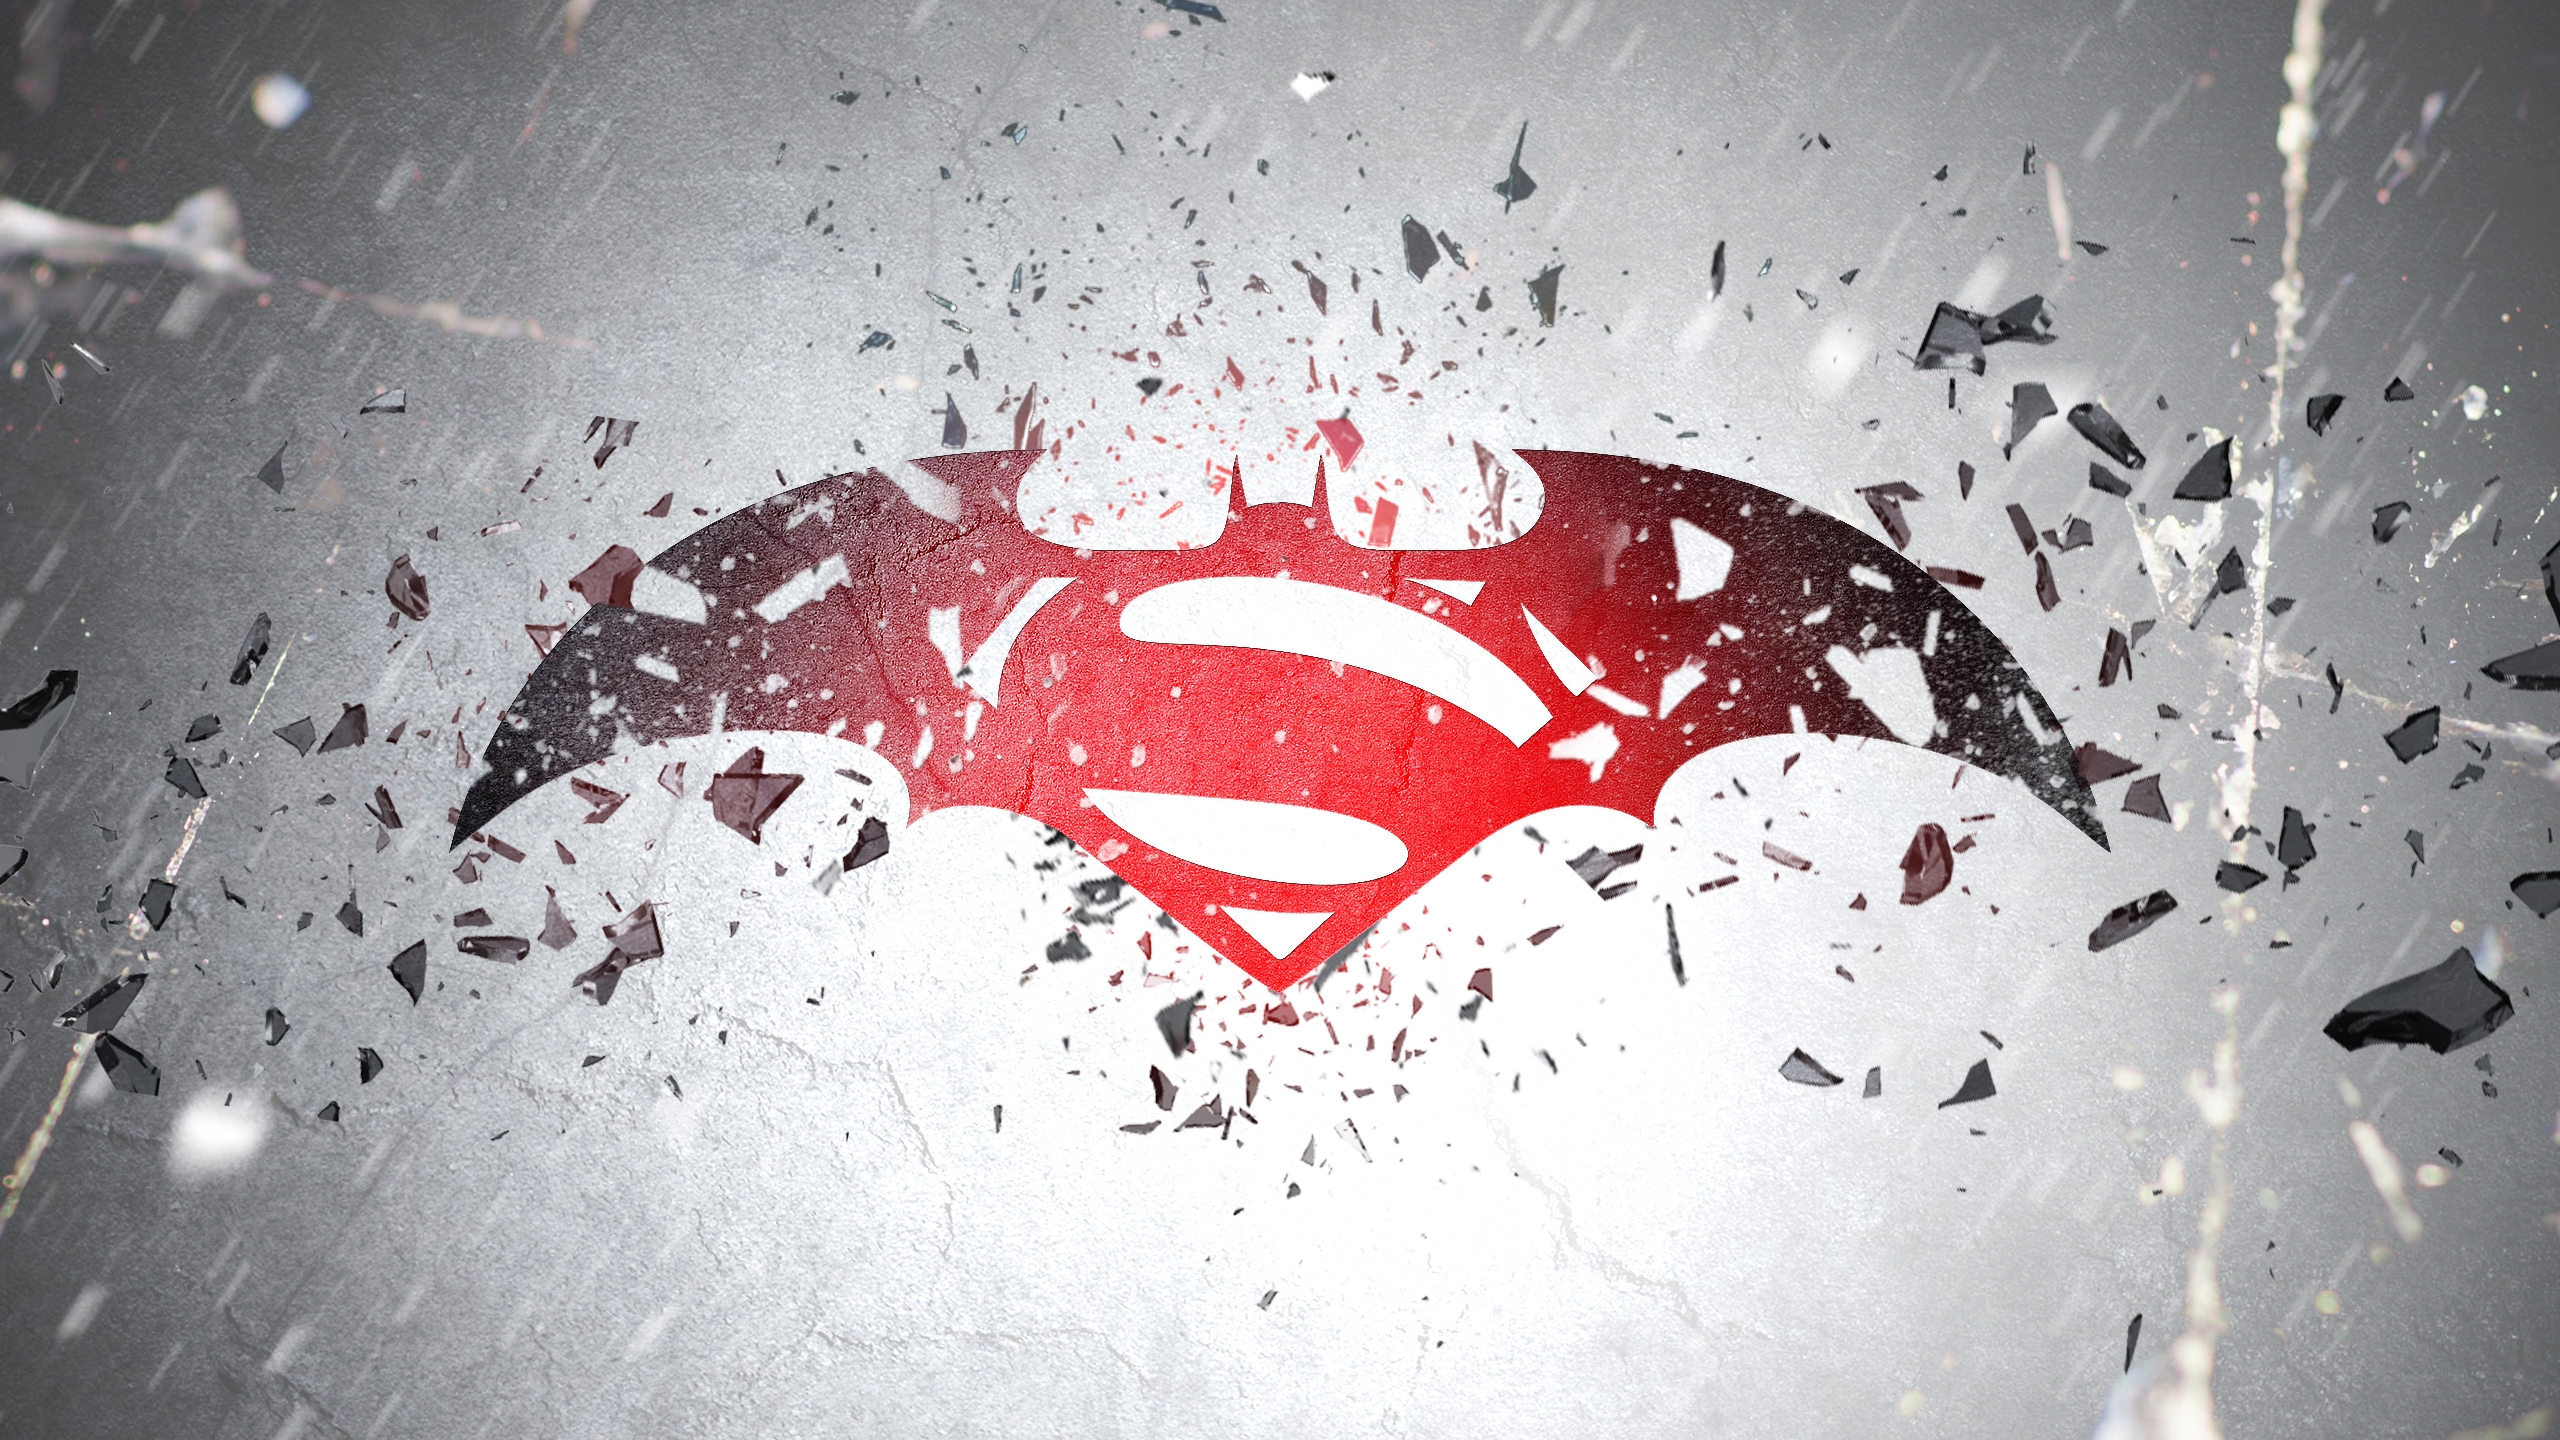 Batman vs Superman Awesome Logo for 2560x1440 HDTV resolution